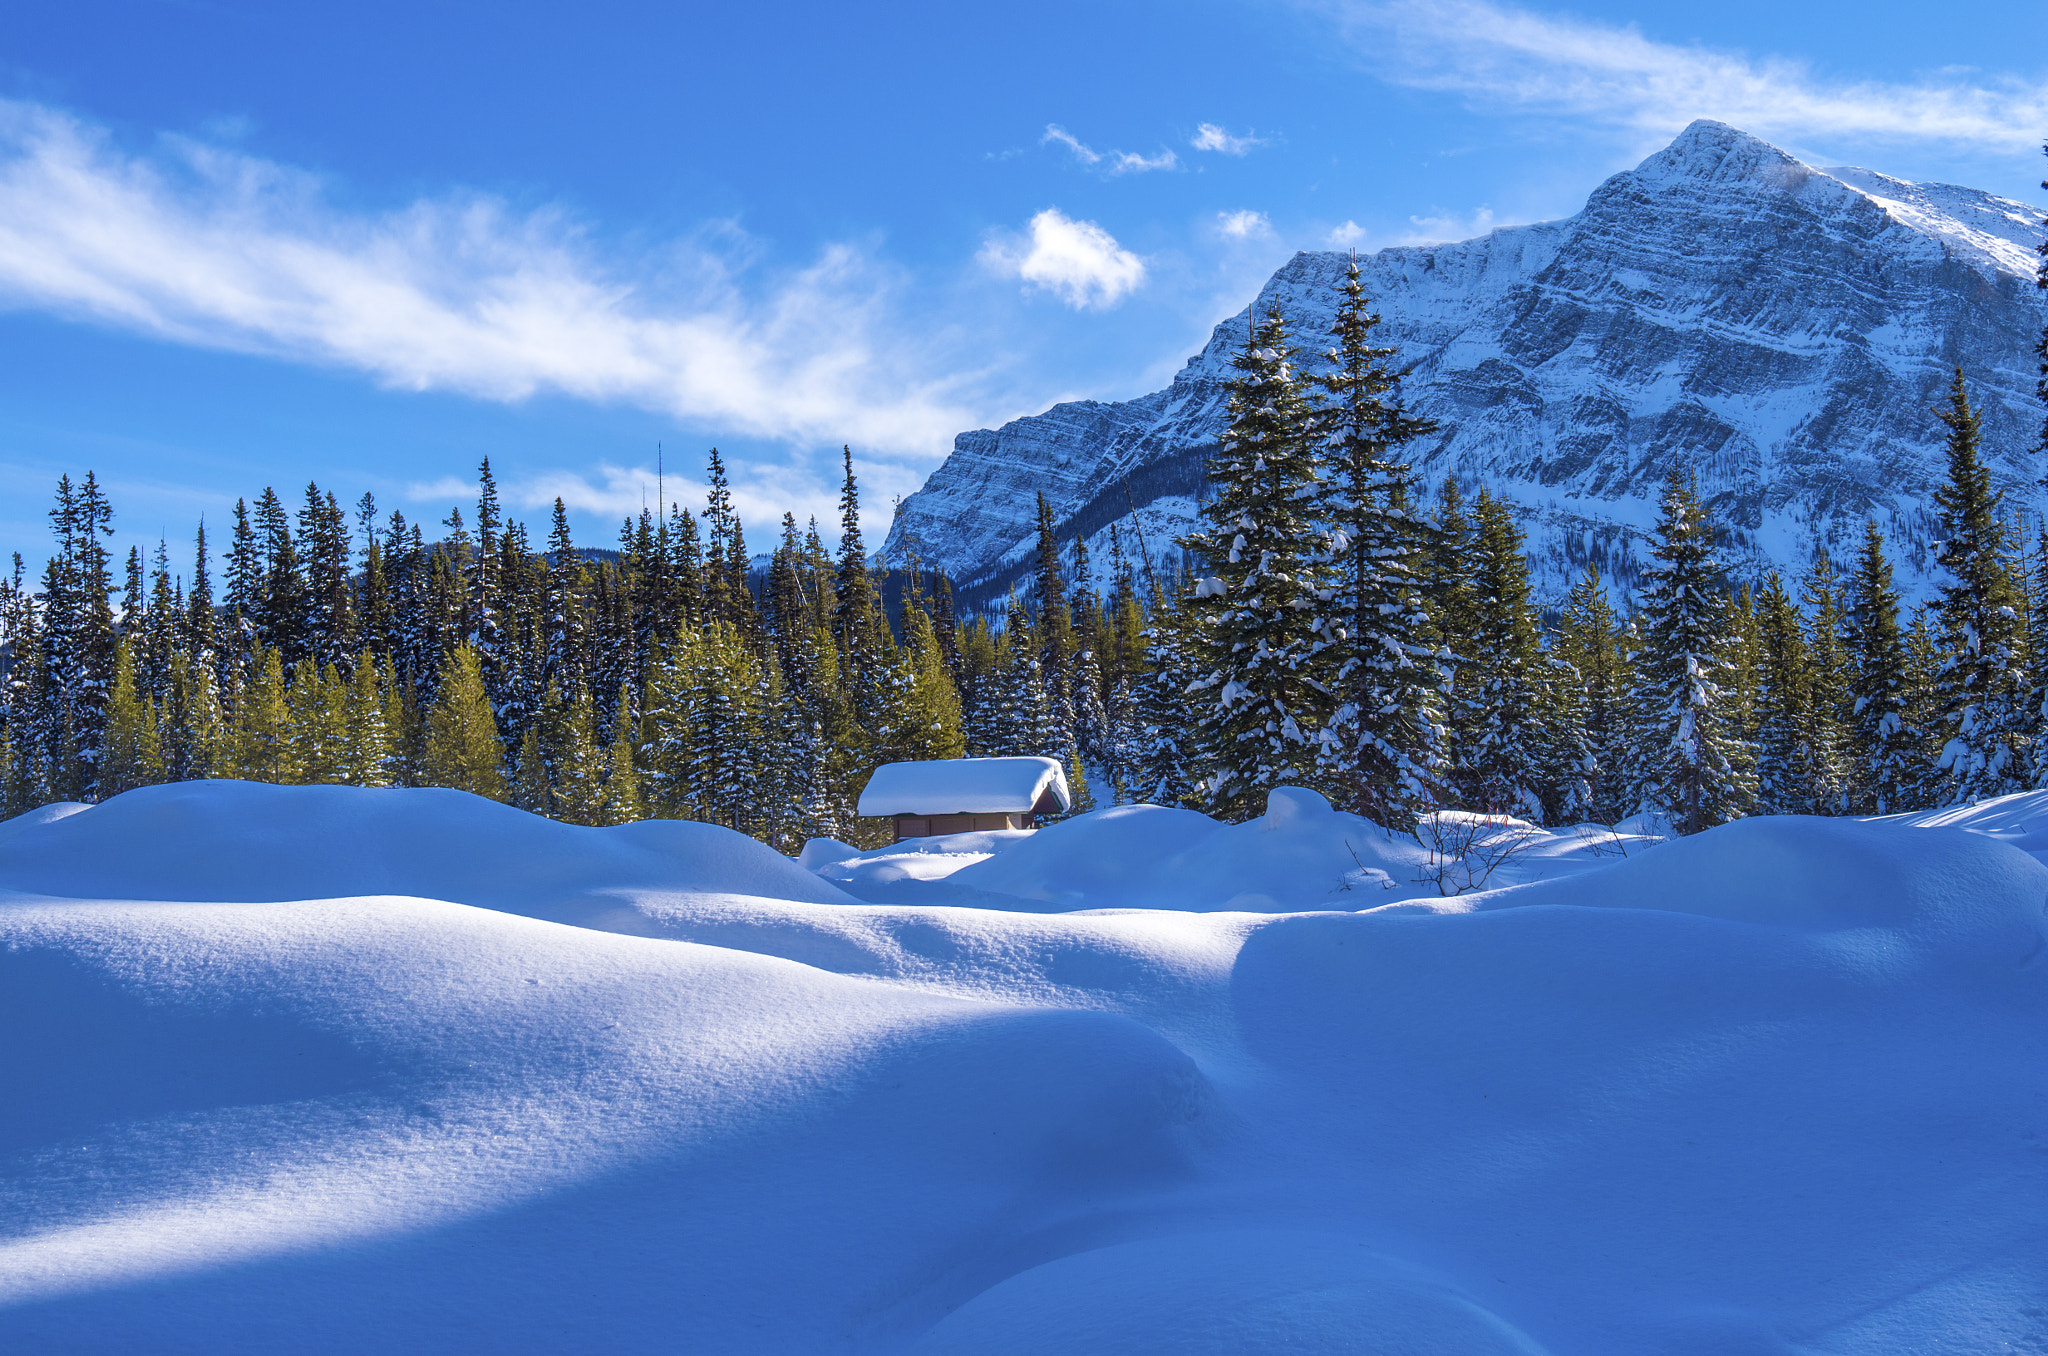 Wallpapers Banff National Park winter snow on the desktop